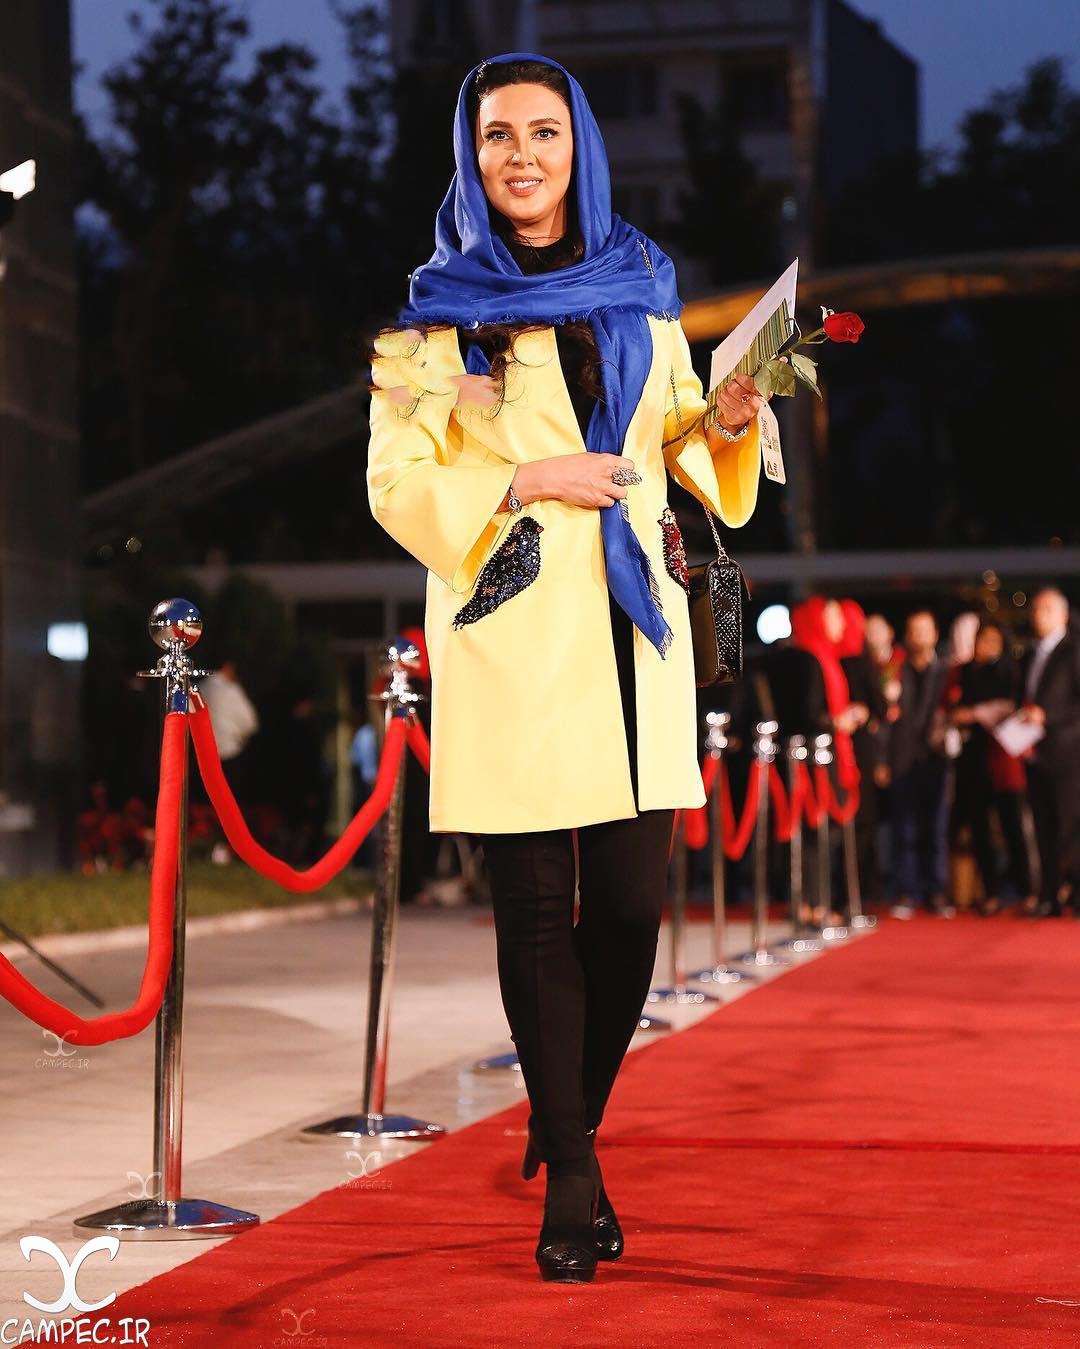 لیلا بلوکات در جشن حافظ